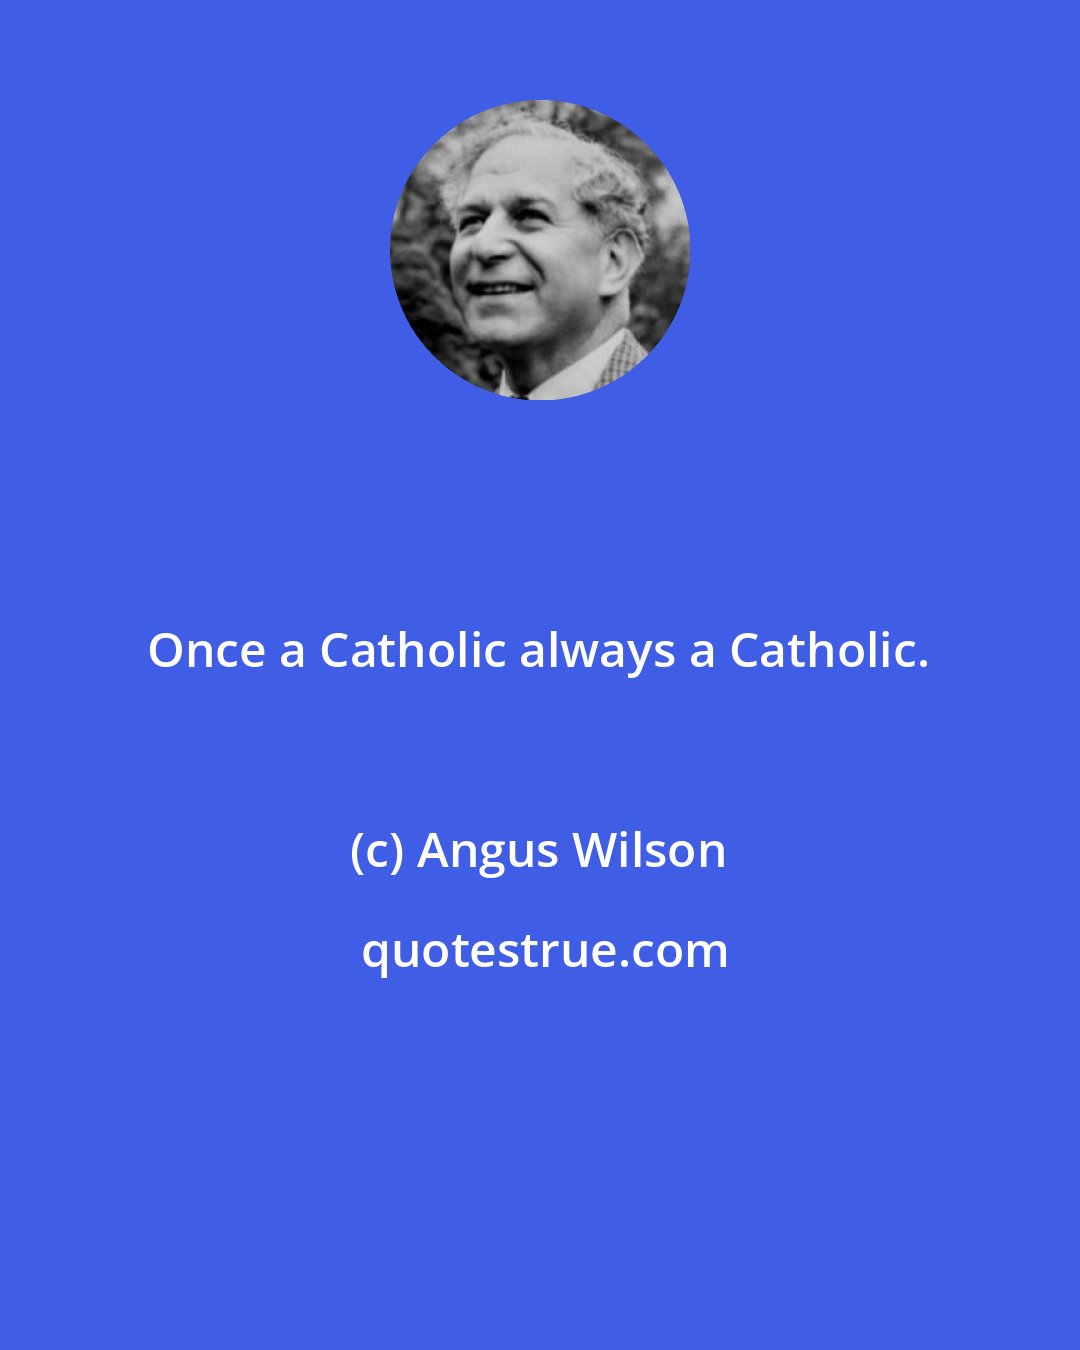 Angus Wilson: Once a Catholic always a Catholic.